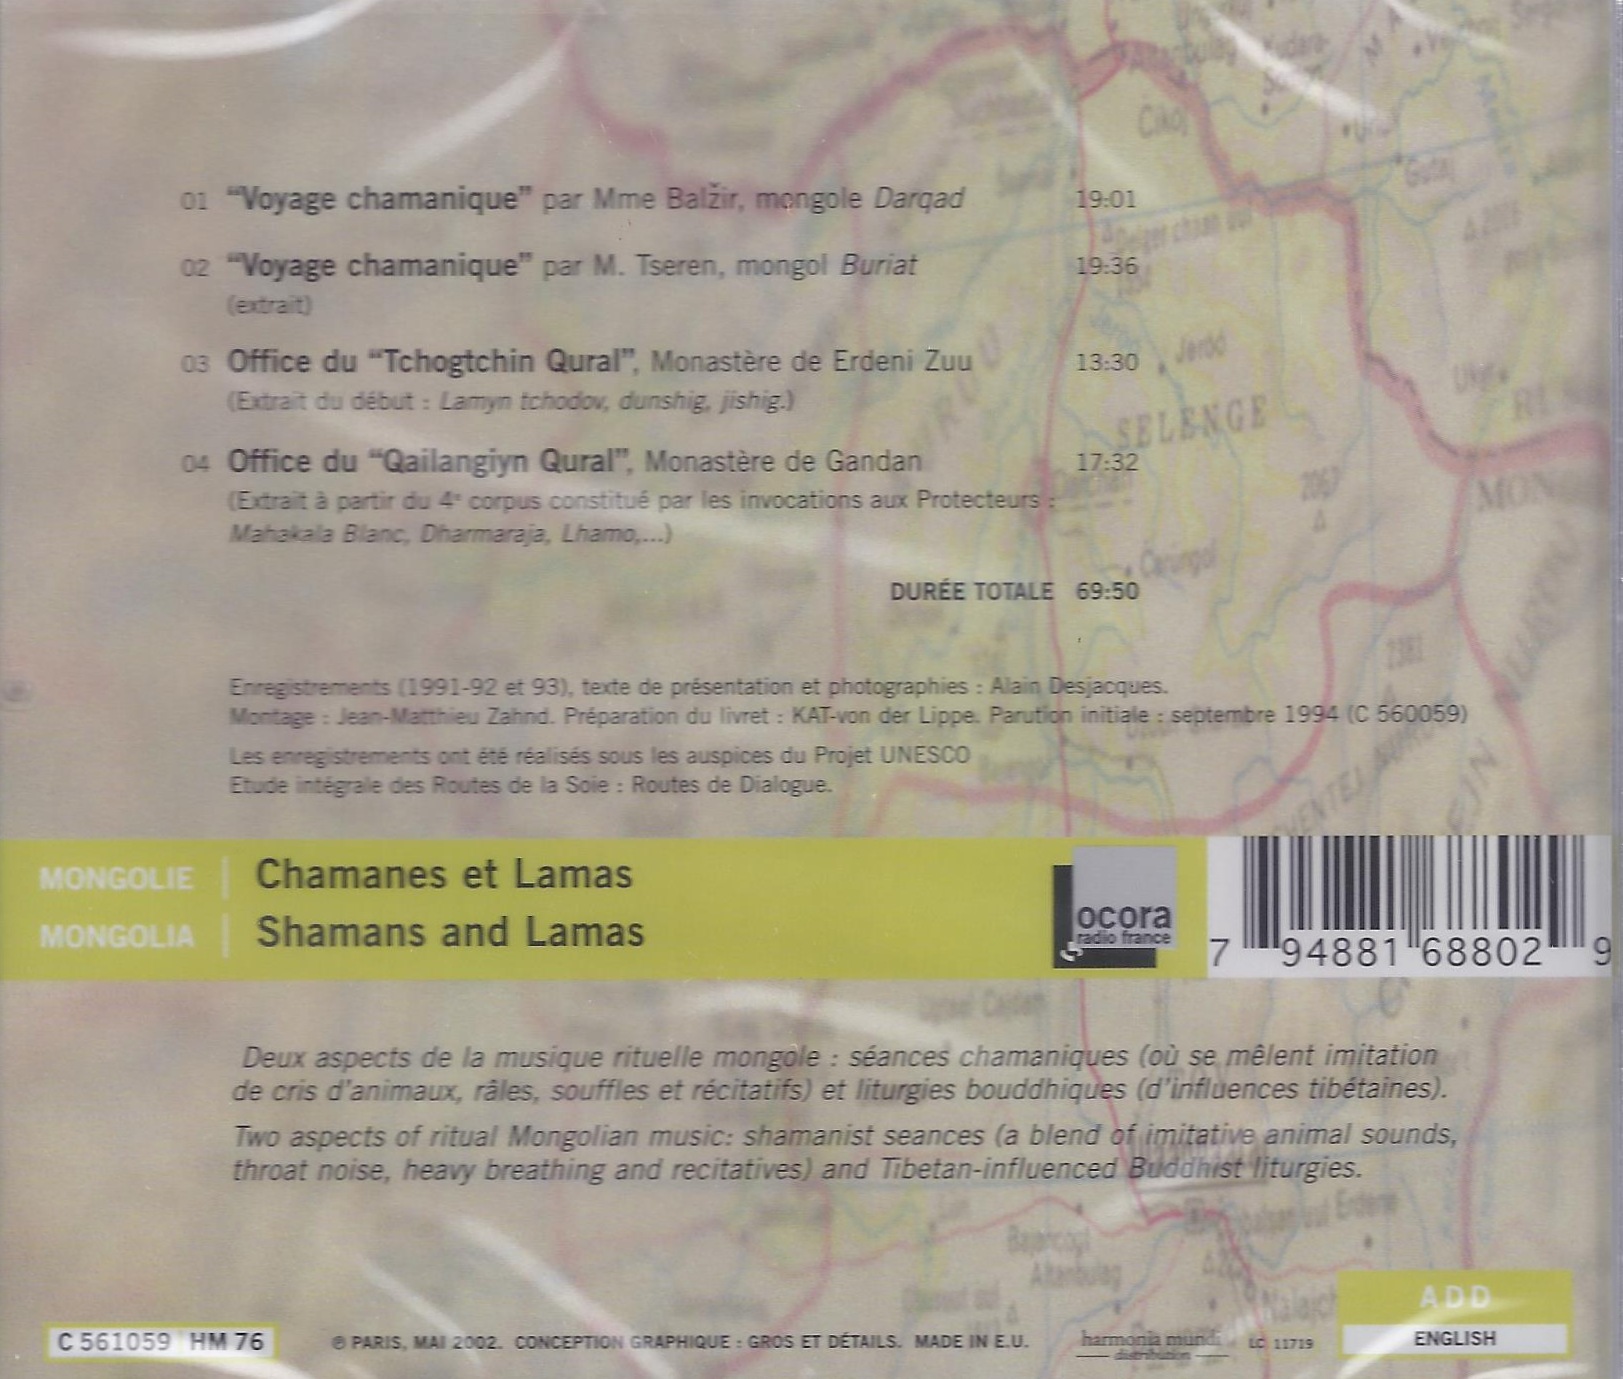 MONGOLIE - Shamans and Lamas - slide-1